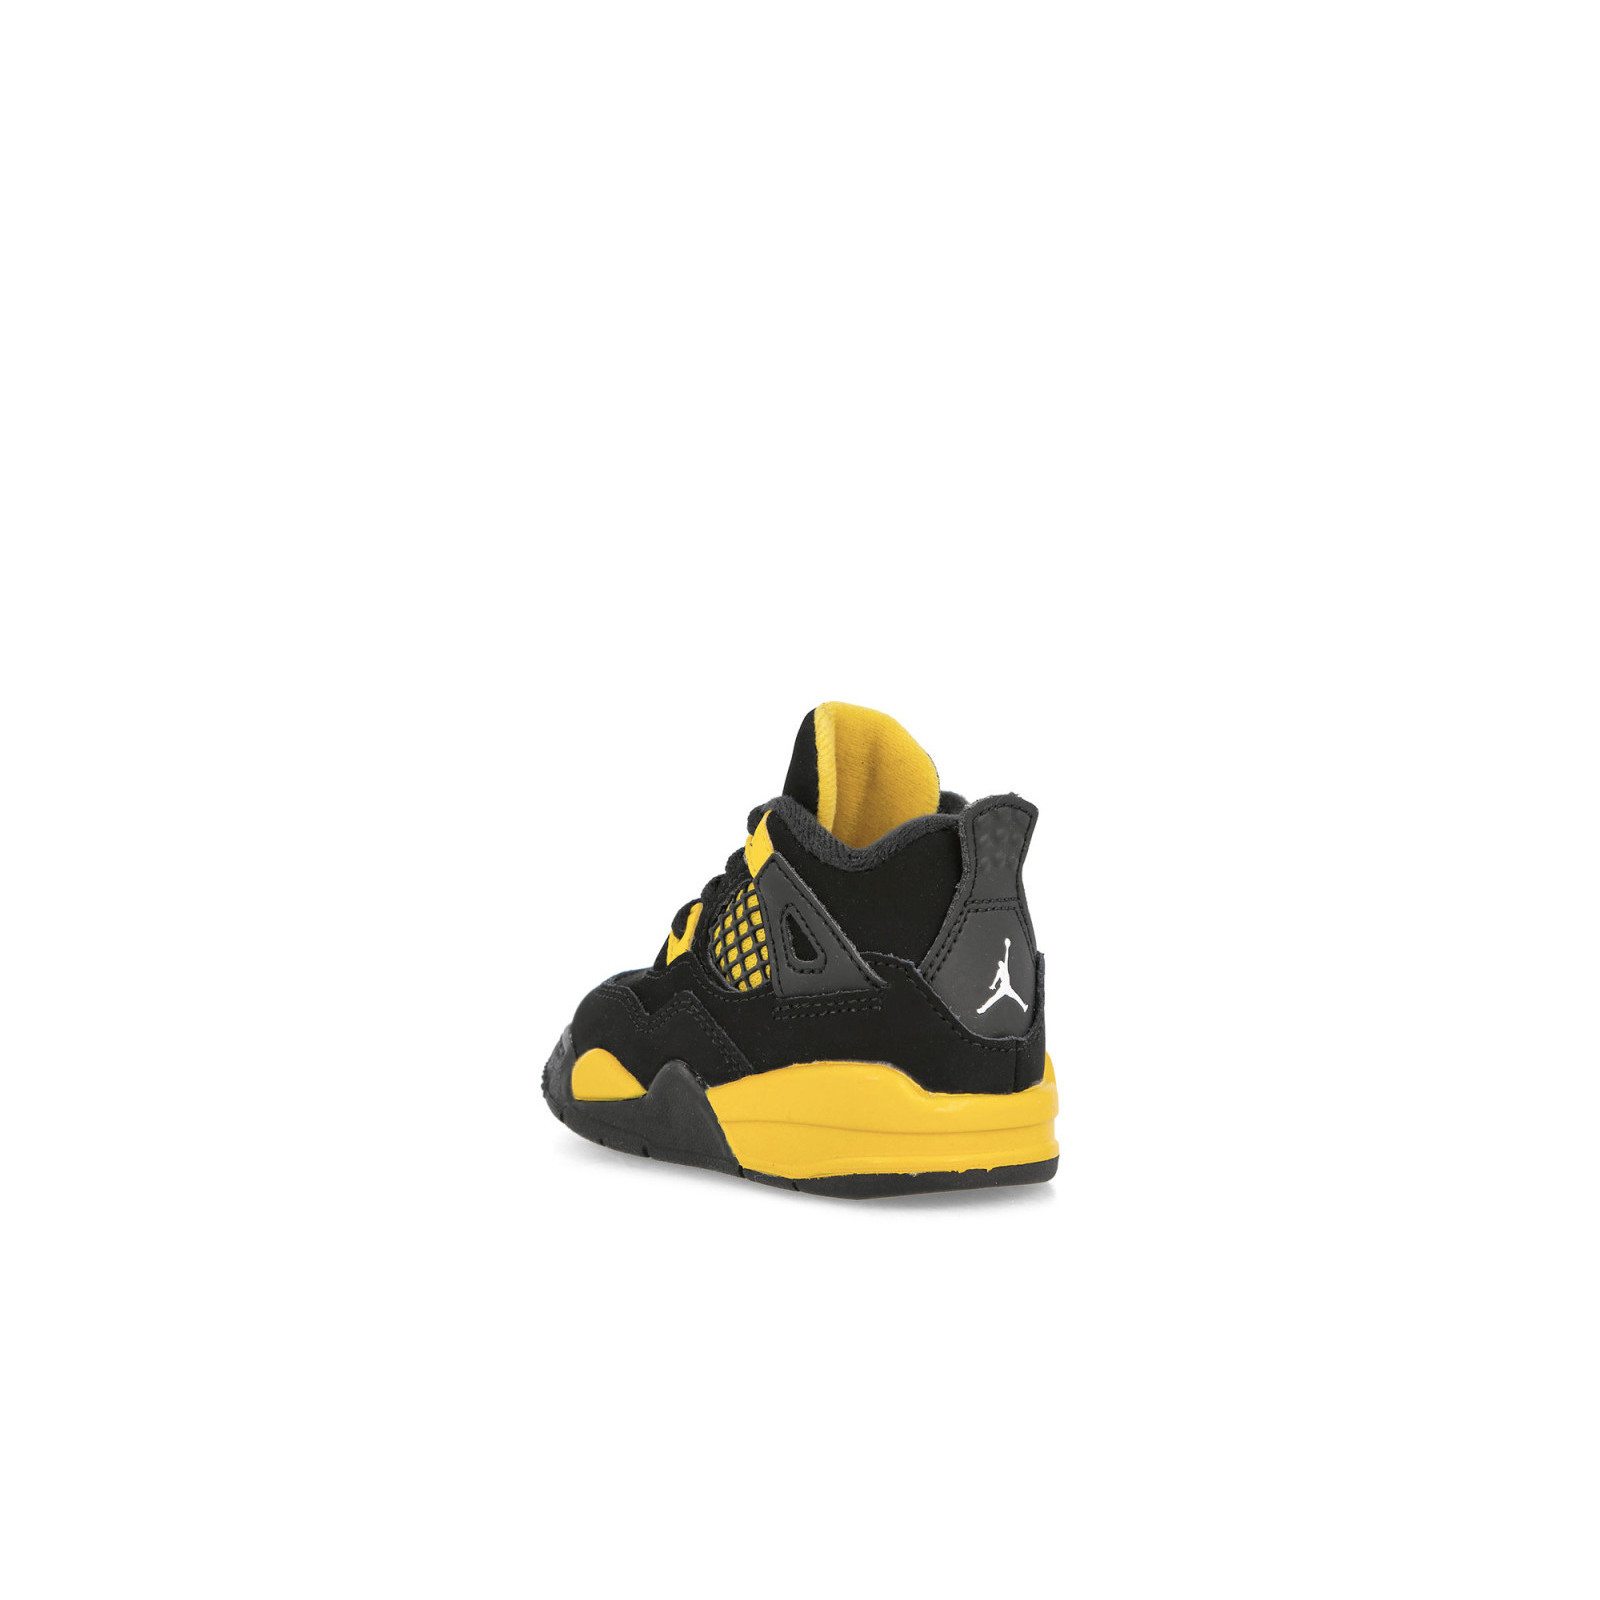 Air Jordan 4 Retro (TD)
« Tour Yellow »